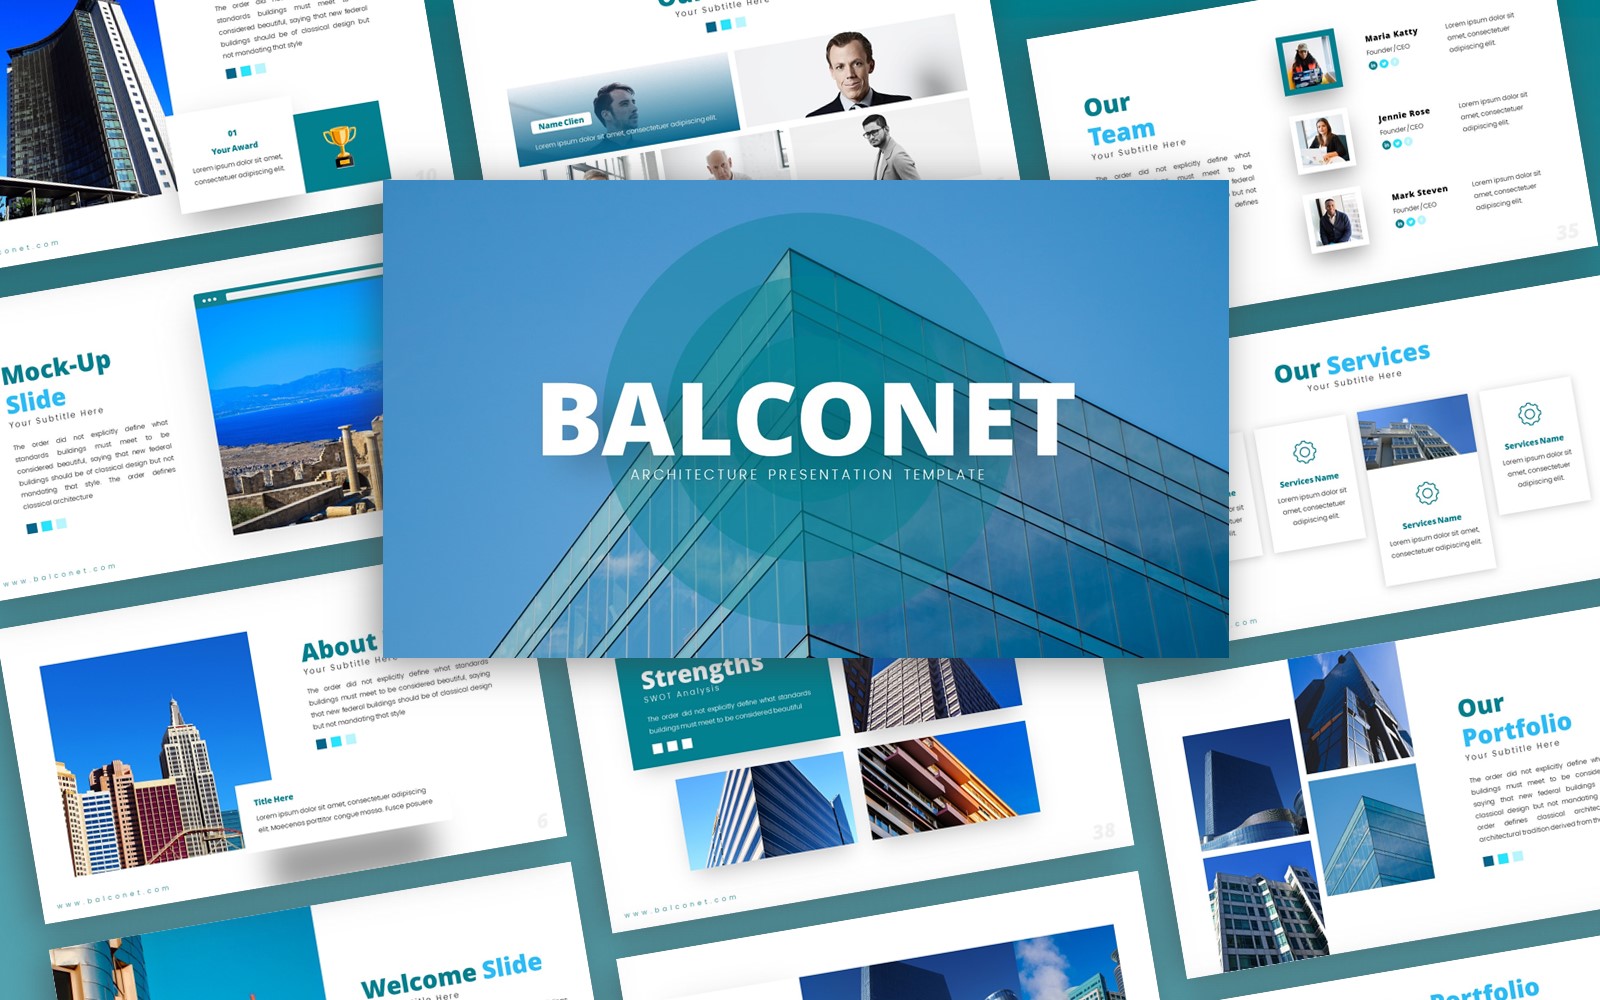 Balconet Architecture Presentation PowerPoint template